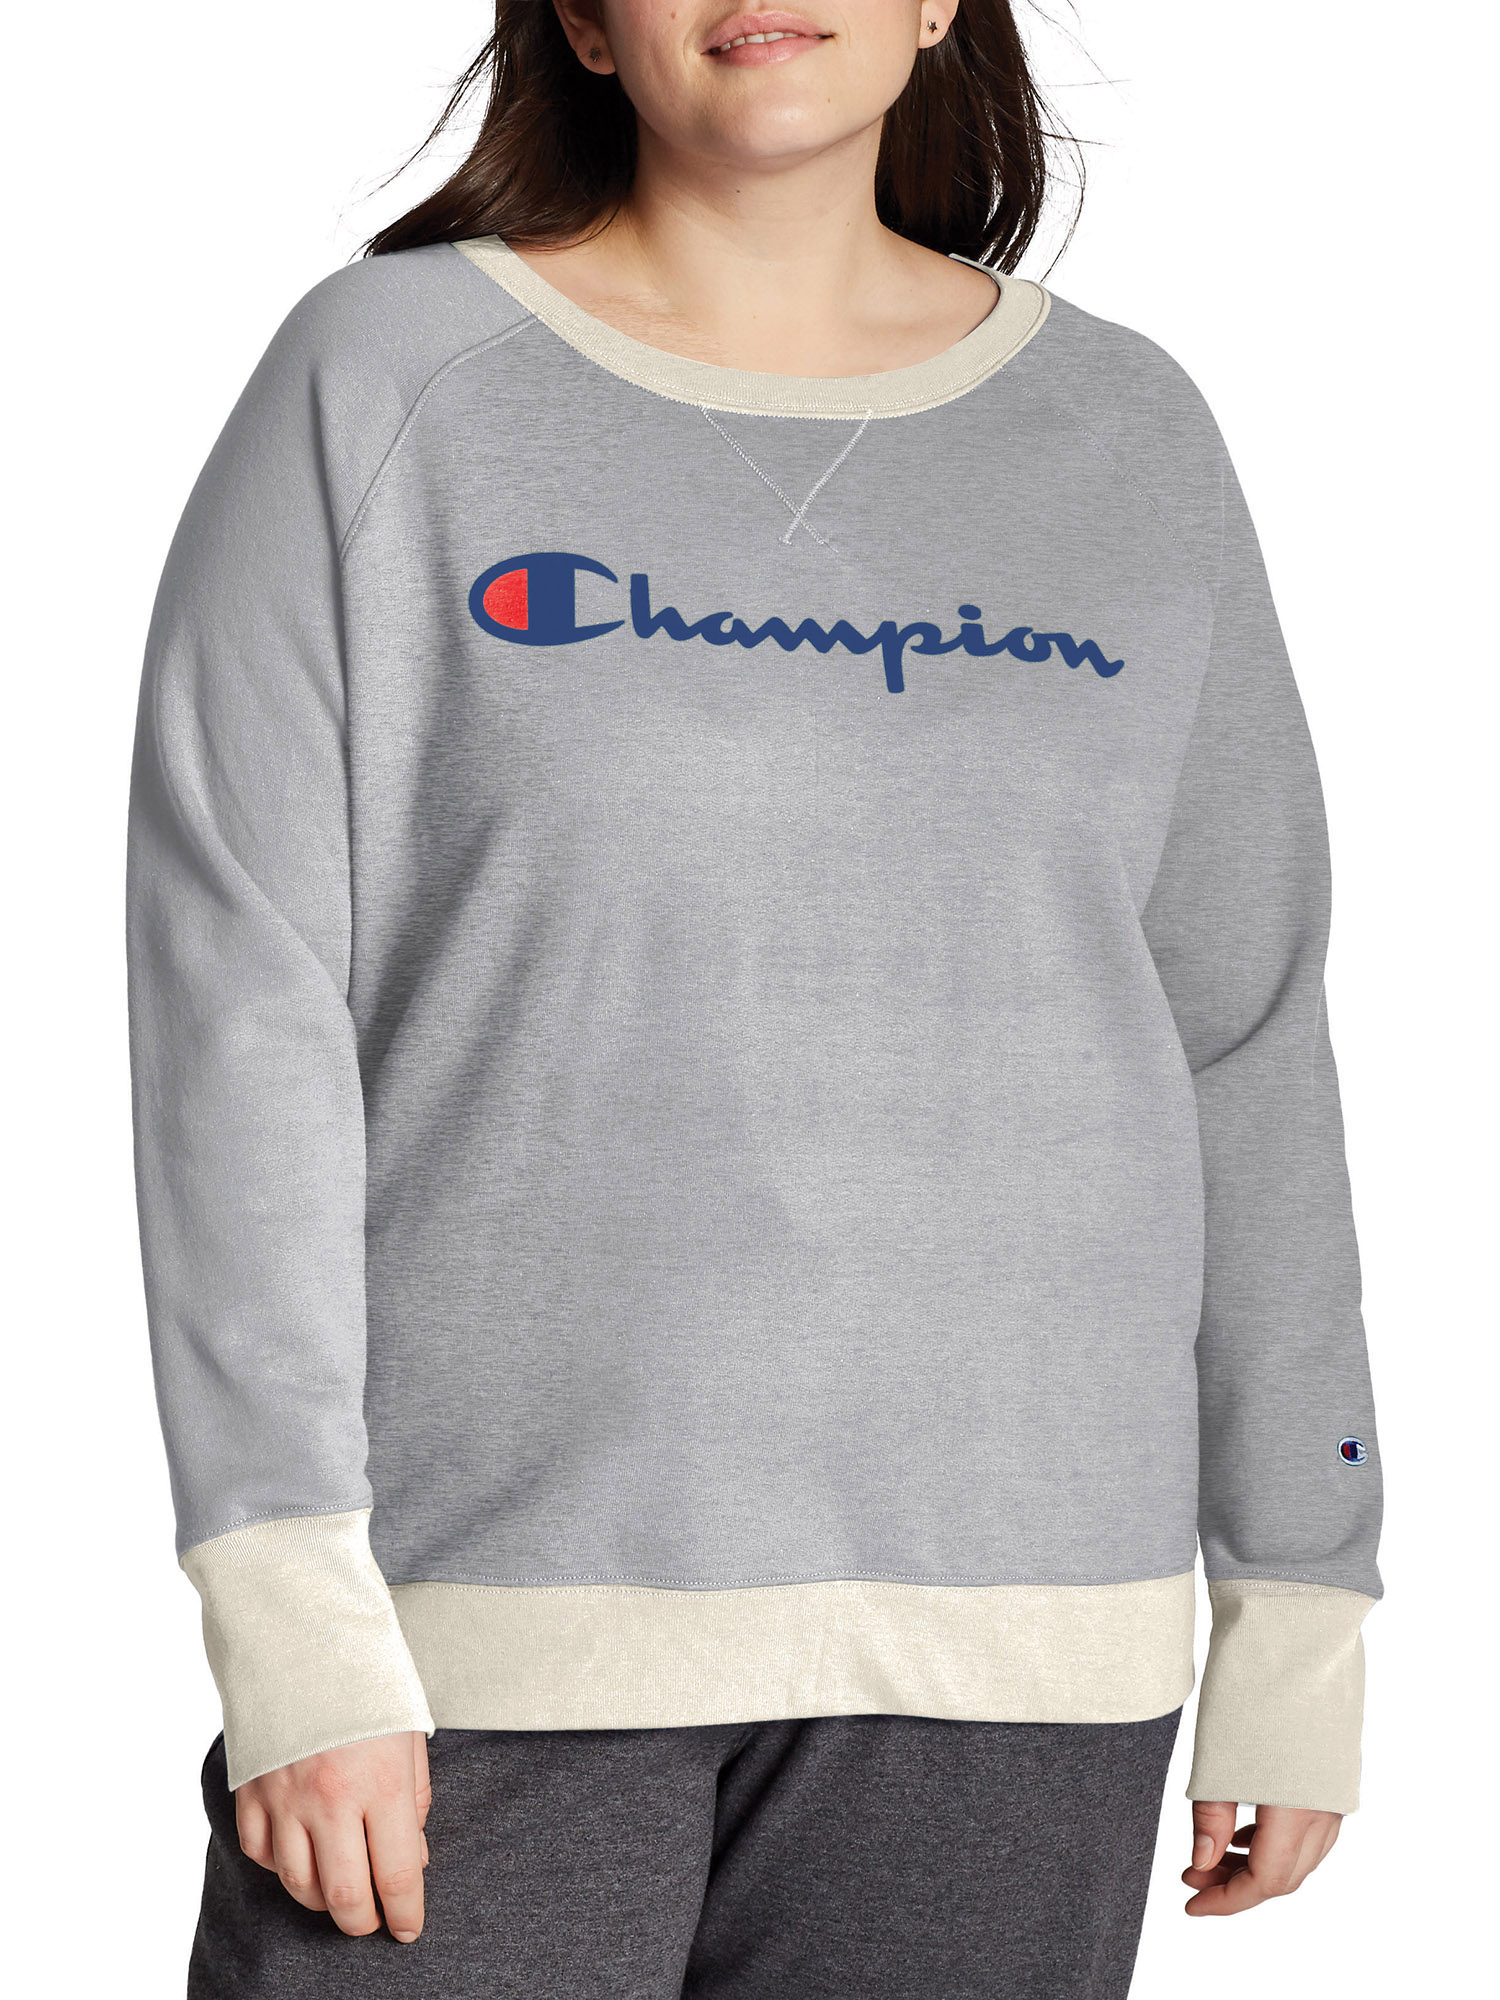 Champion Women's Plus Size Powerblend Graphic Crewneck Sweatshirt - image 1 of 6